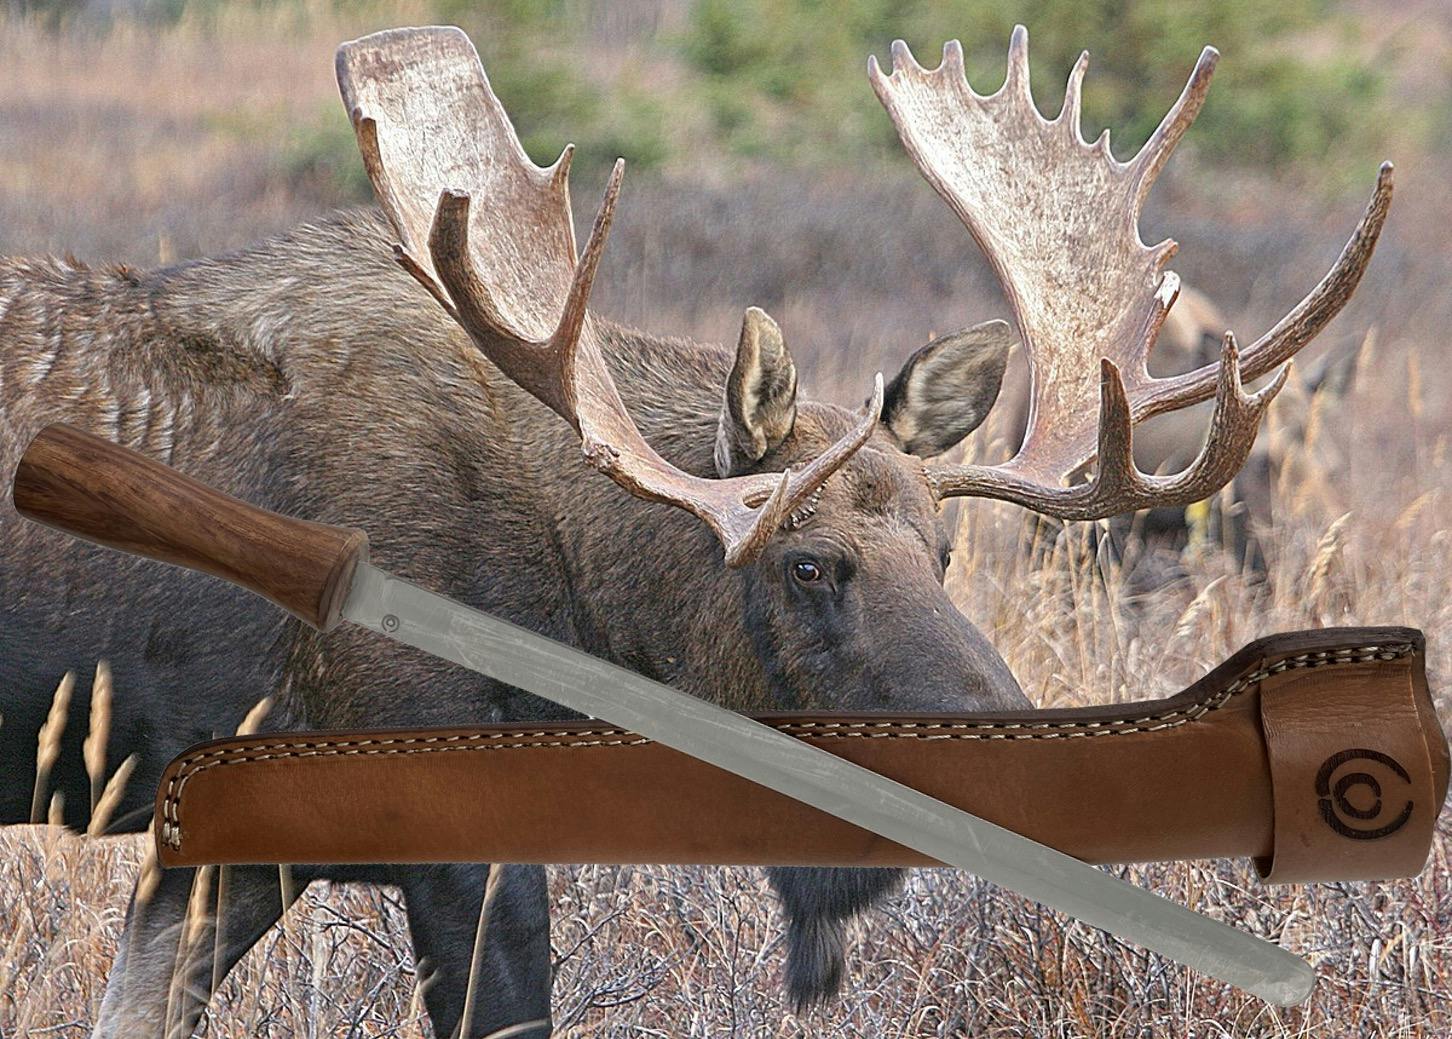 Swevest Field dress knife "Big Ox"